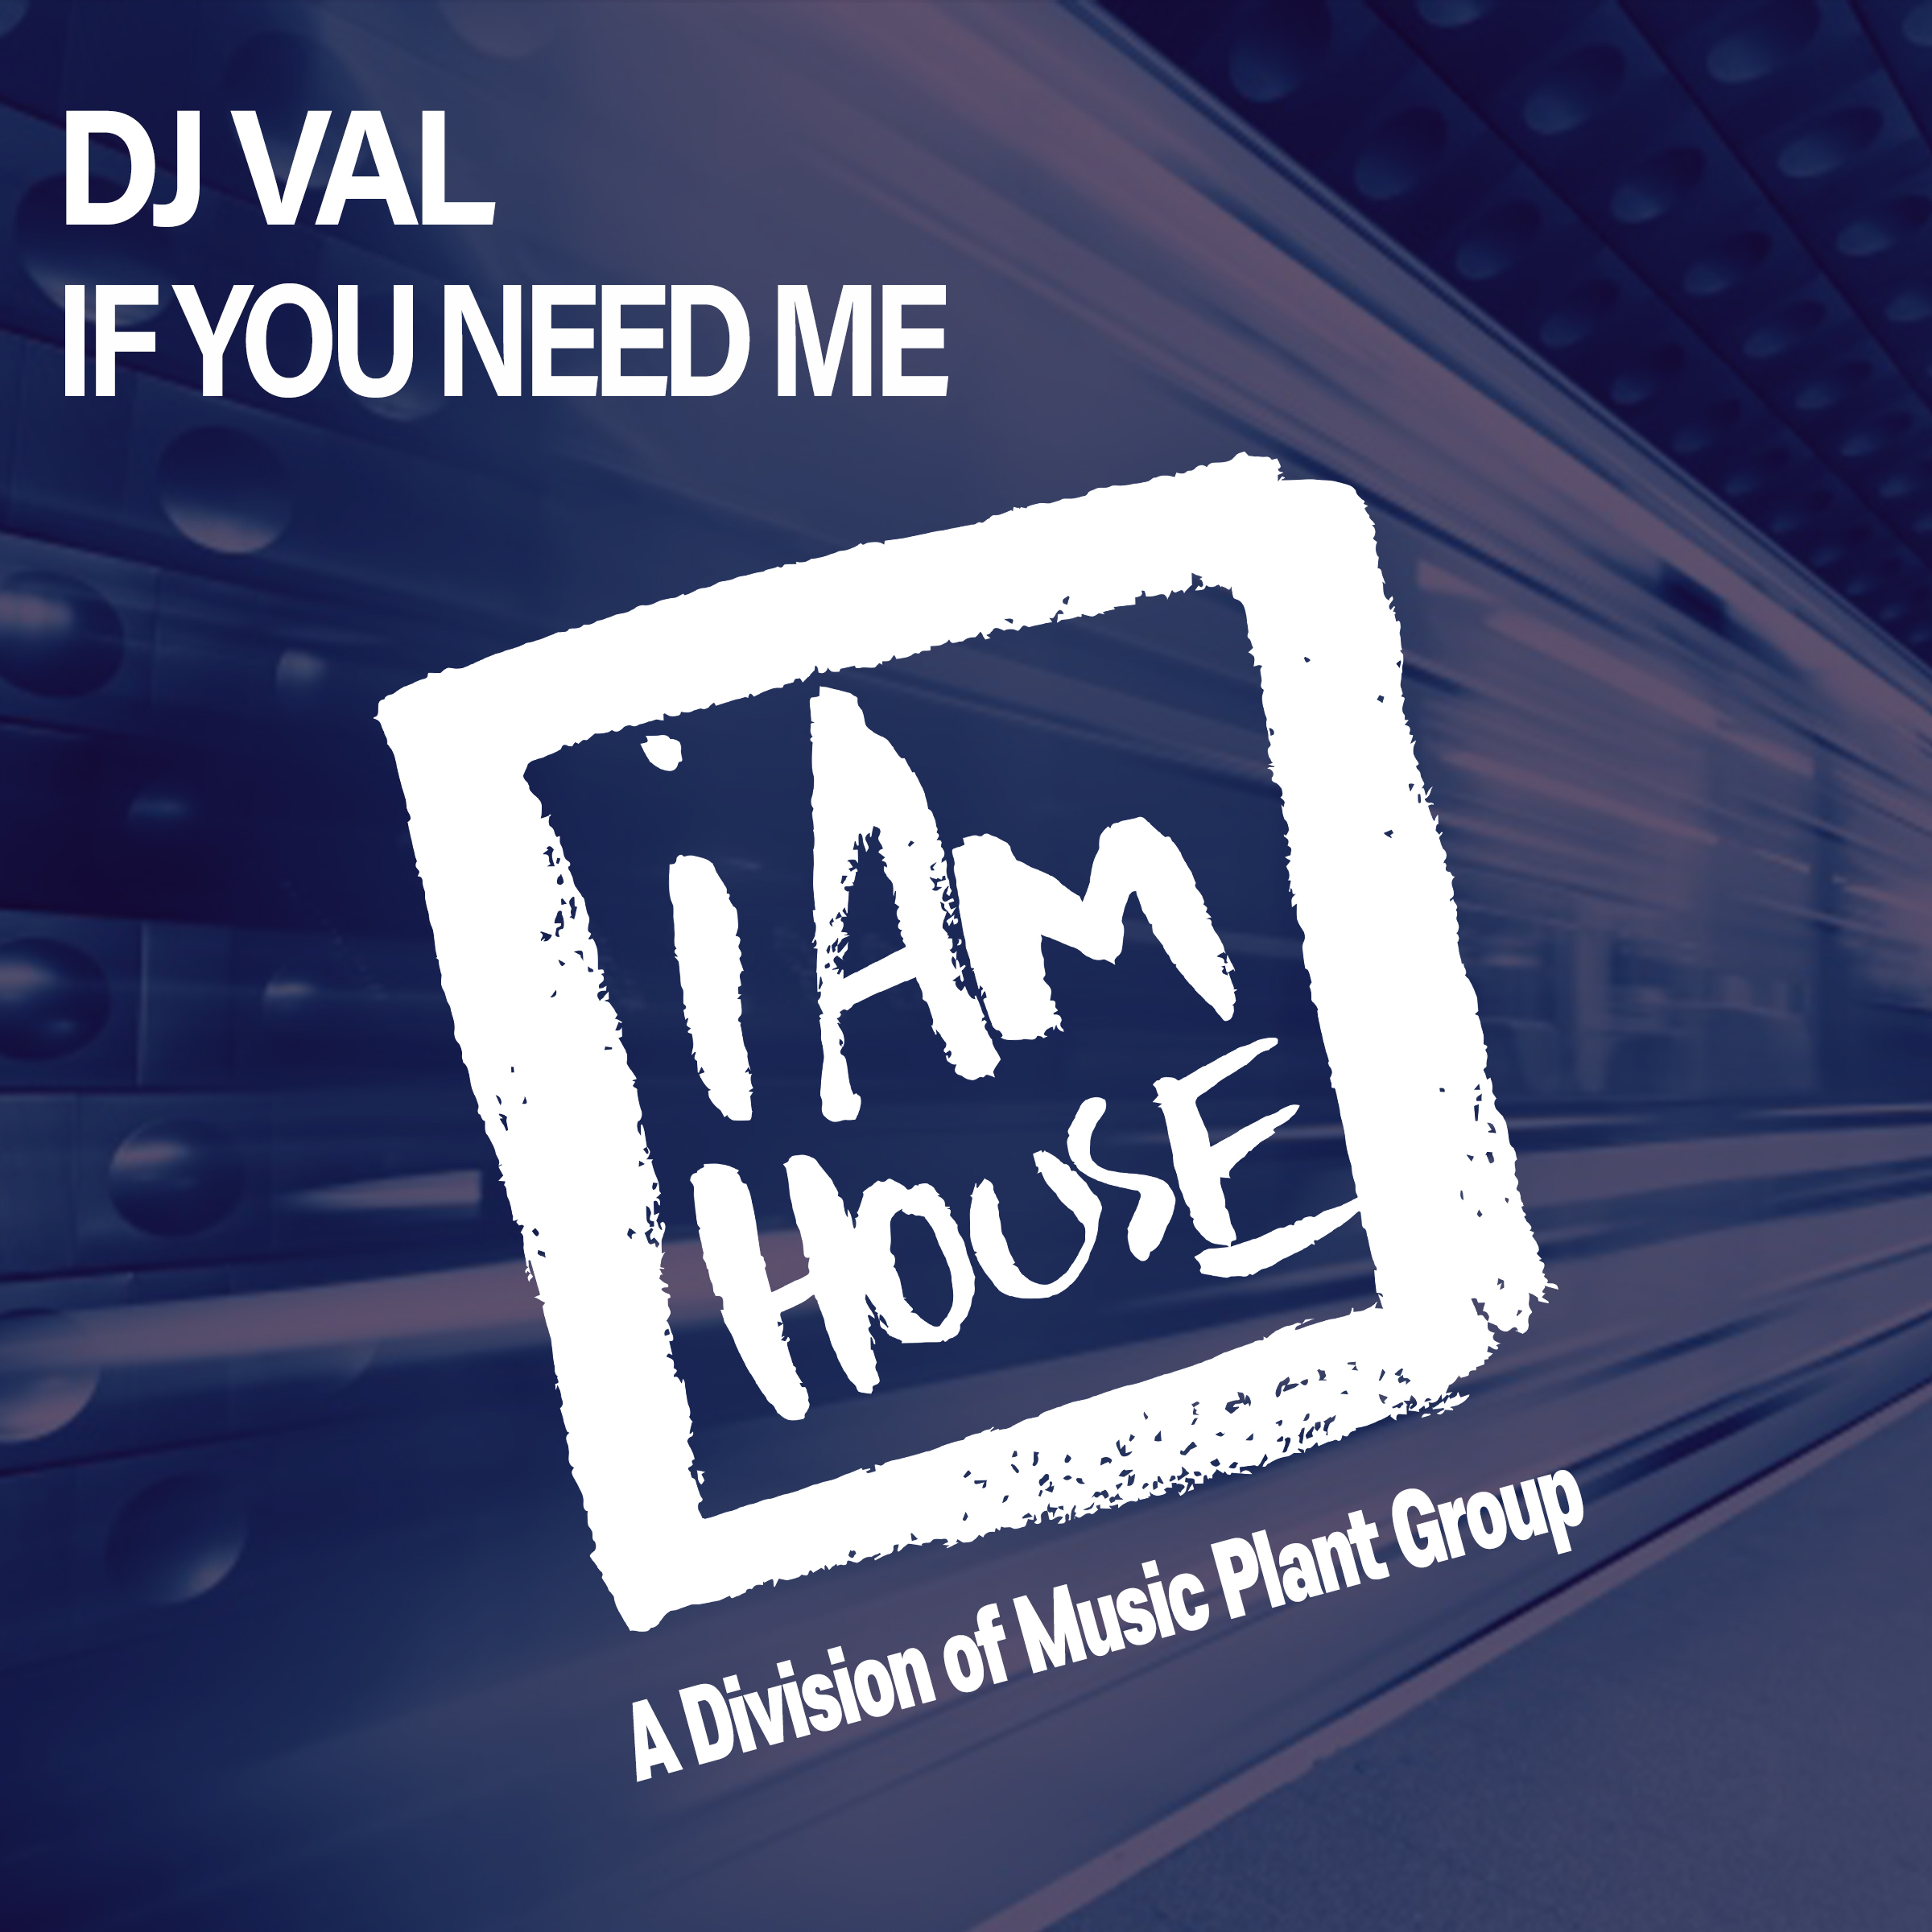 Dj val mp3 все песни. DJ Val альбомы. Taking to the Top DJ Val. I need you. Val песни.